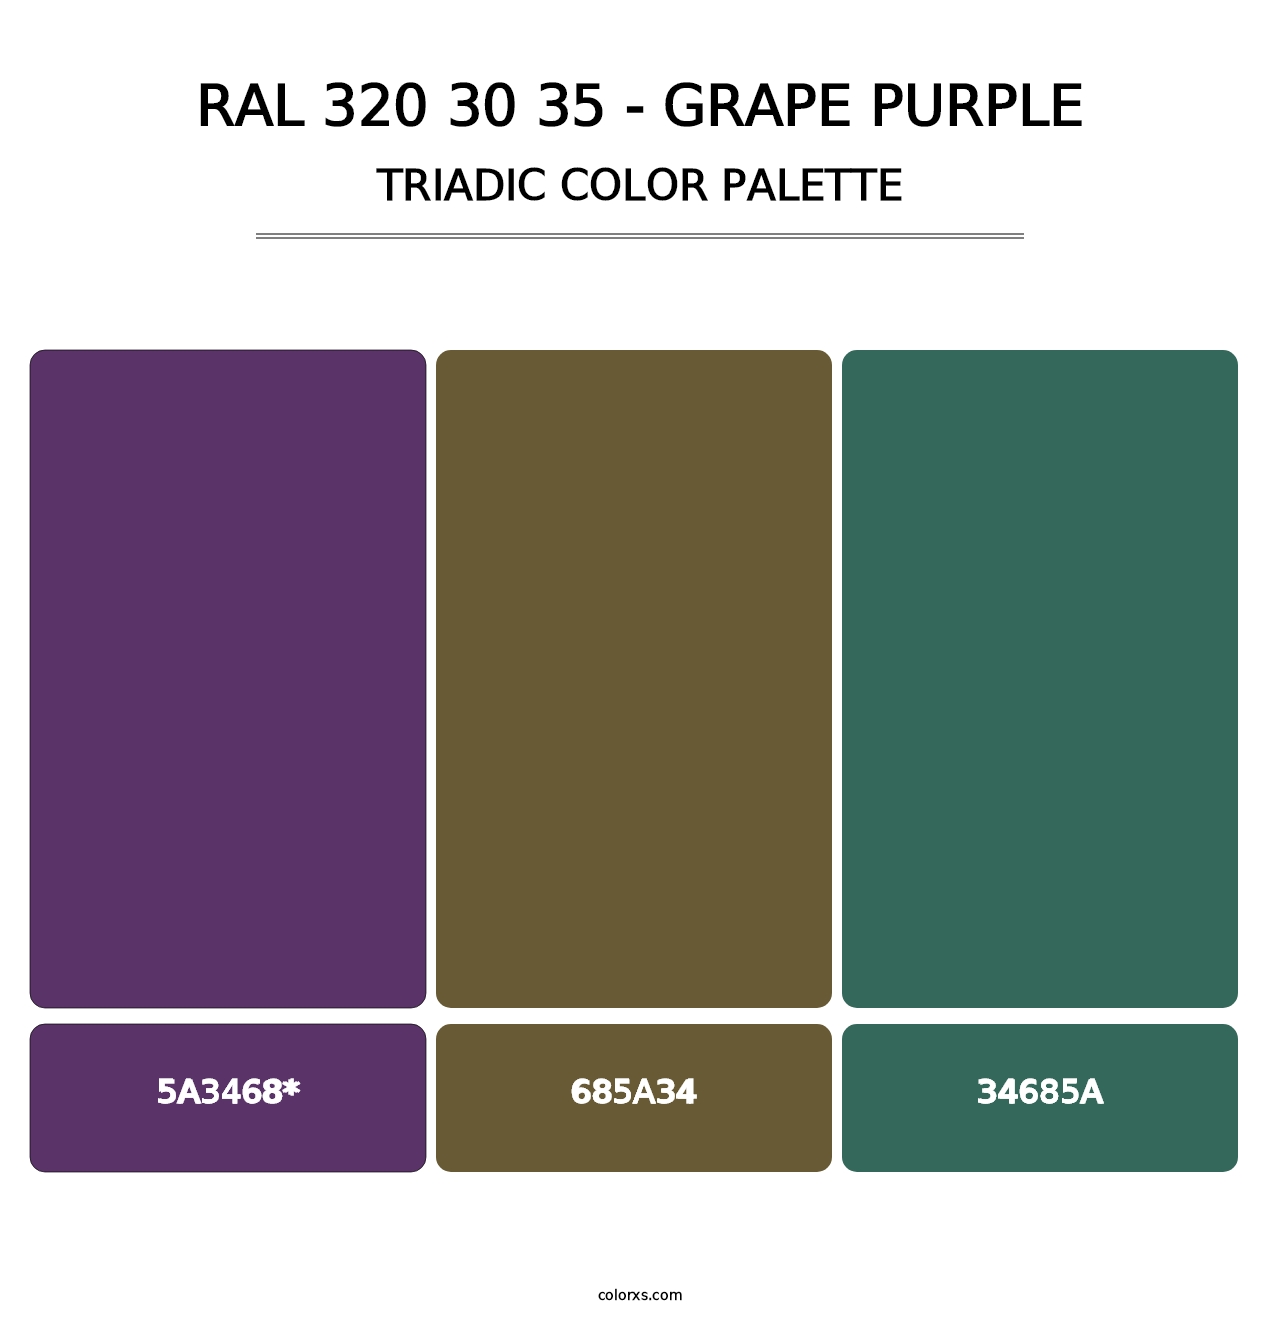 RAL 320 30 35 - Grape Purple - Triadic Color Palette